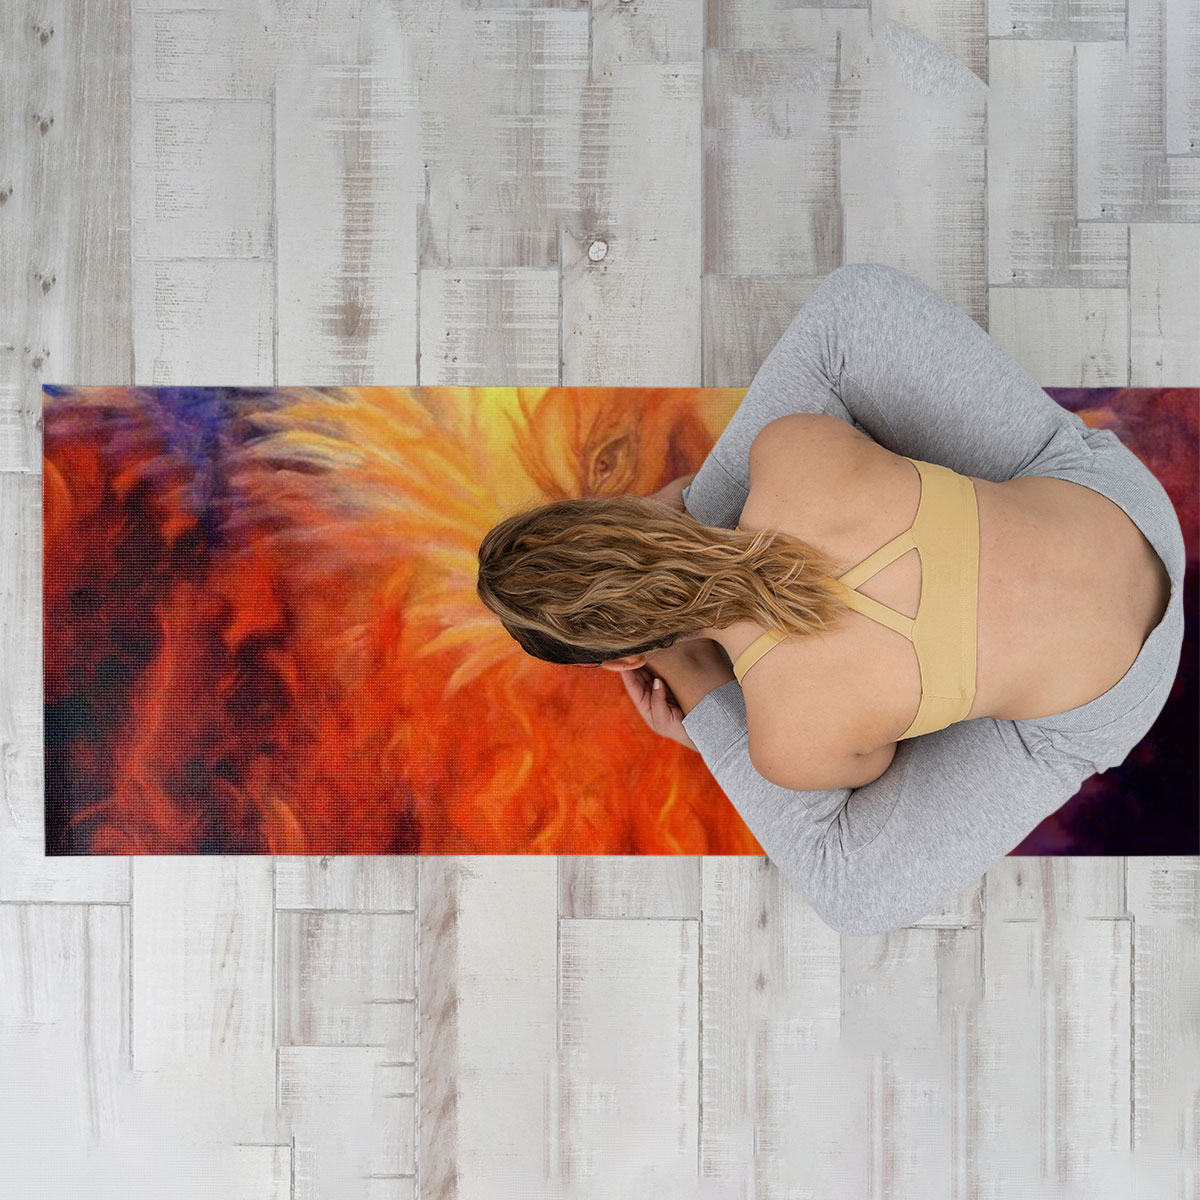 Phoenix Yoga Mat